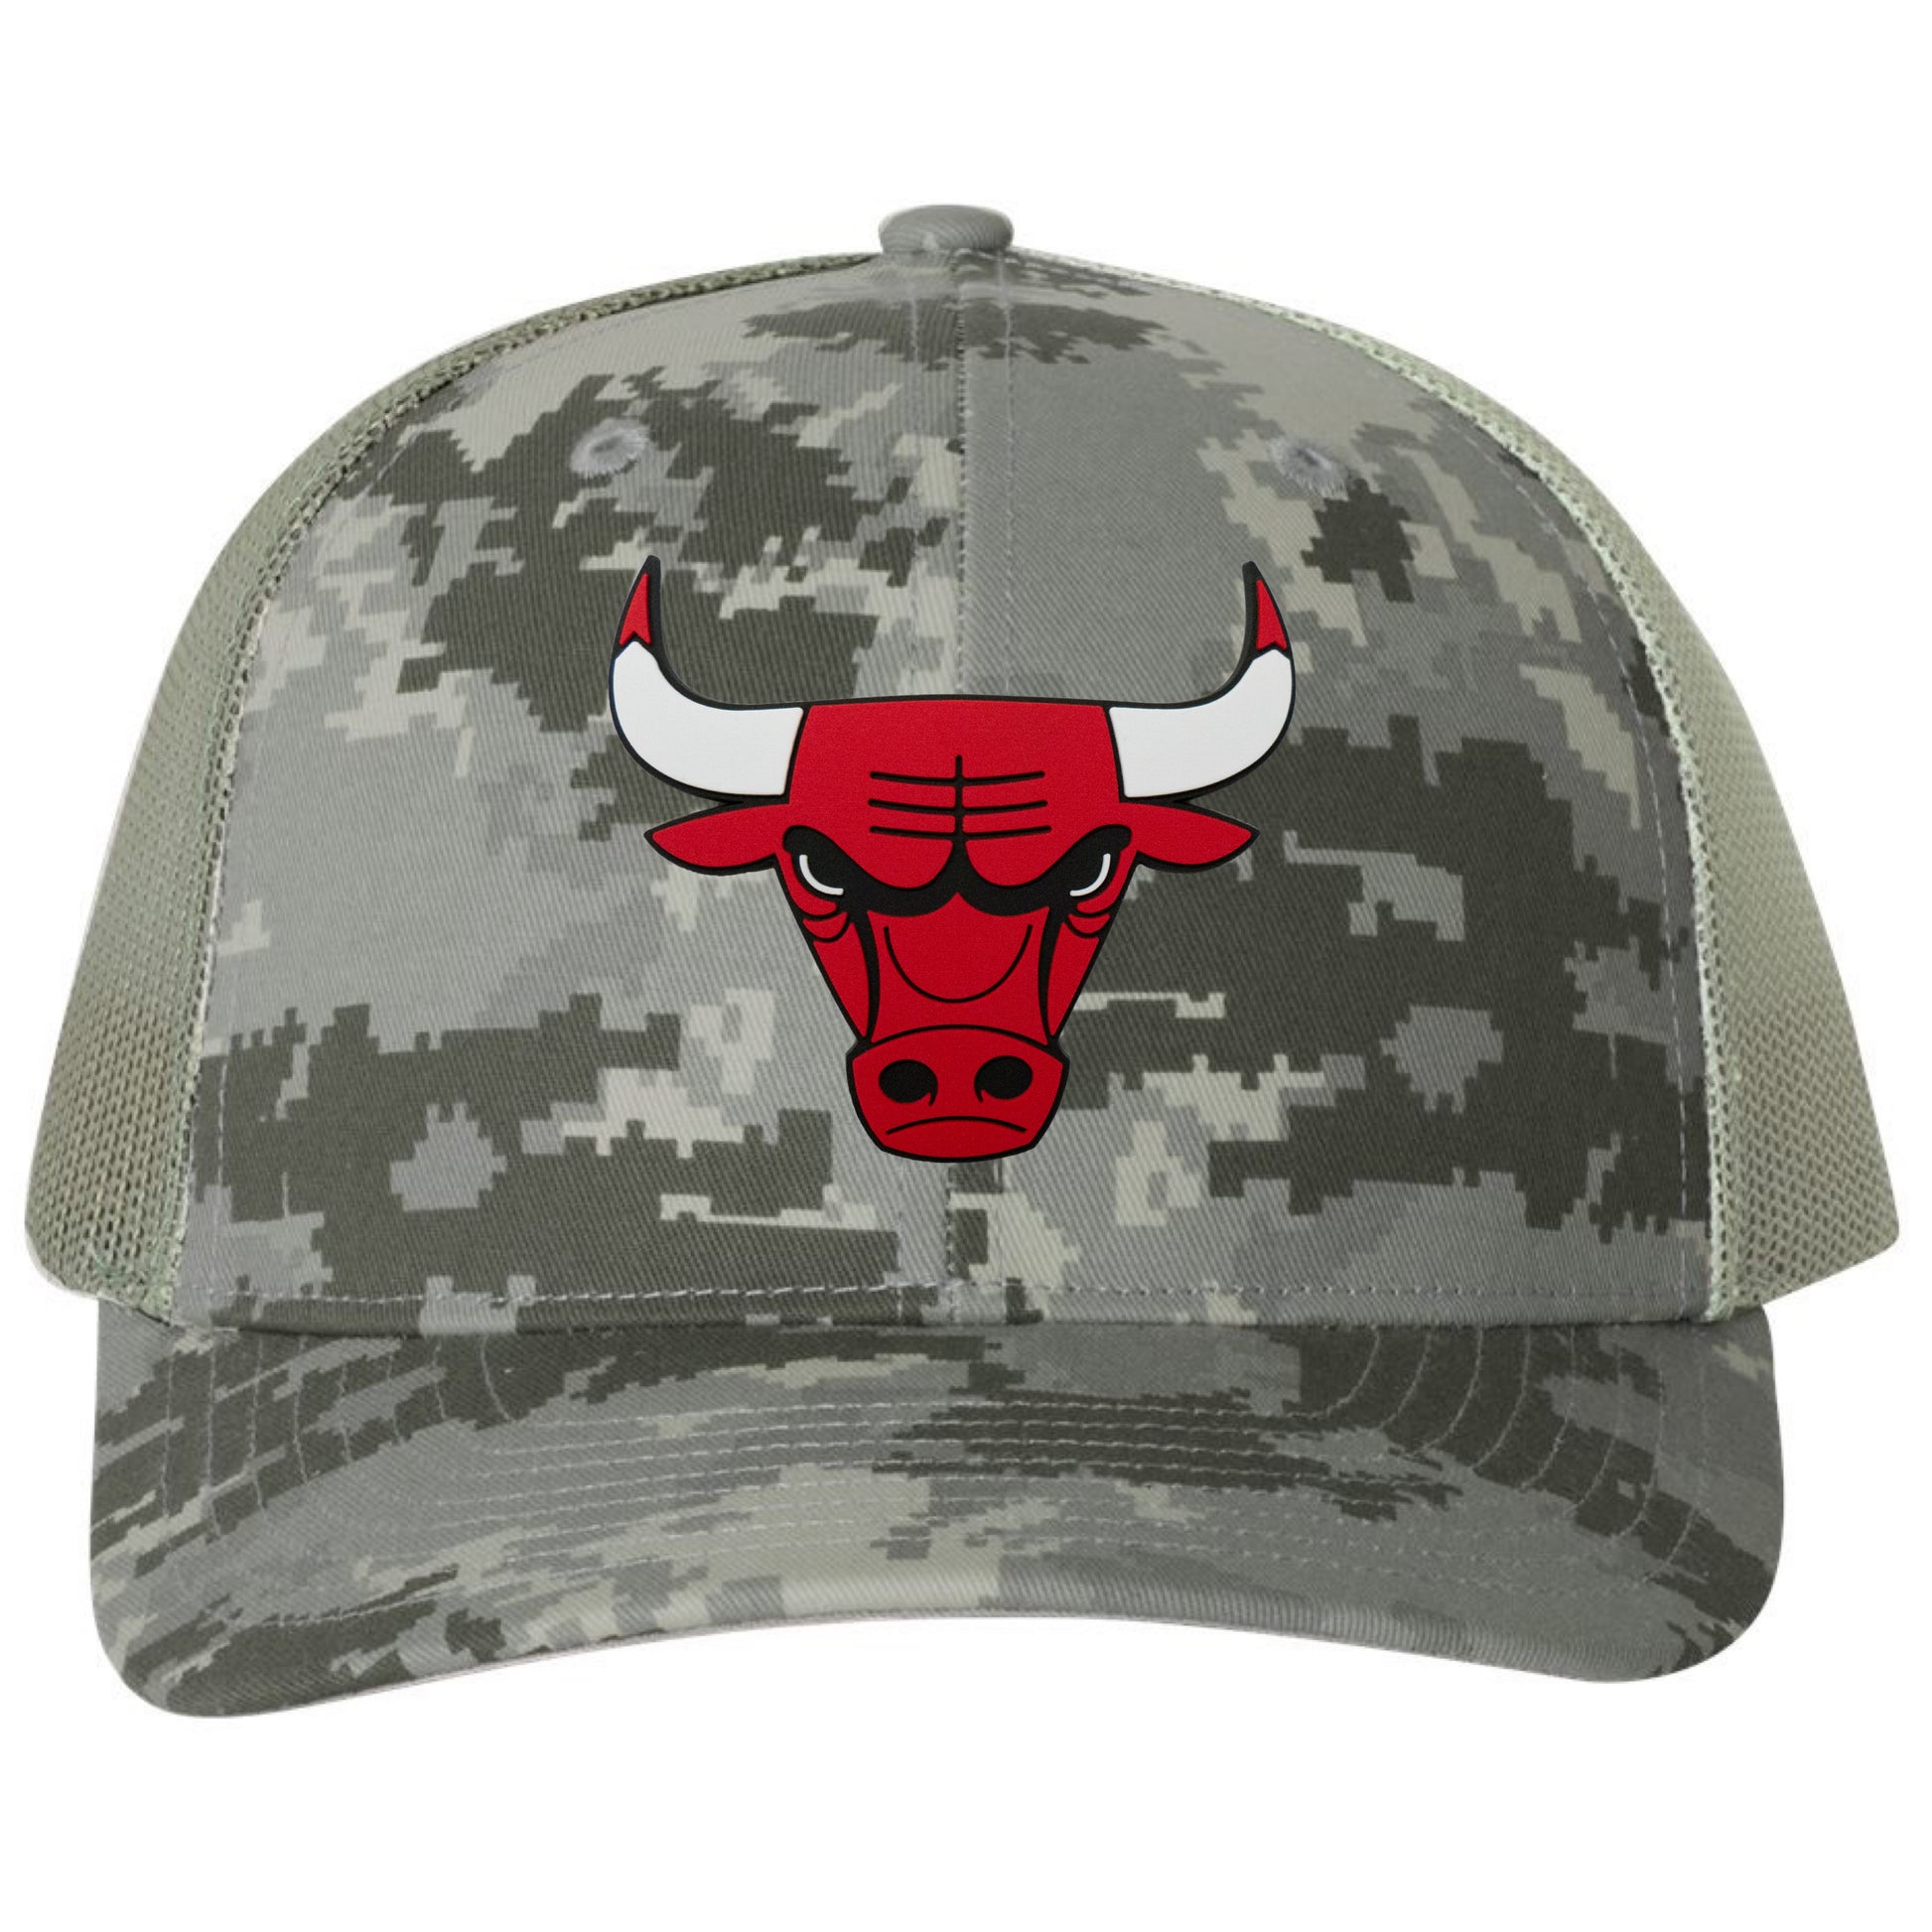 Chicago Bulls Patterned Snapback Trucker Hat- Military Digital Camo - Ten Gallon Hat Co.